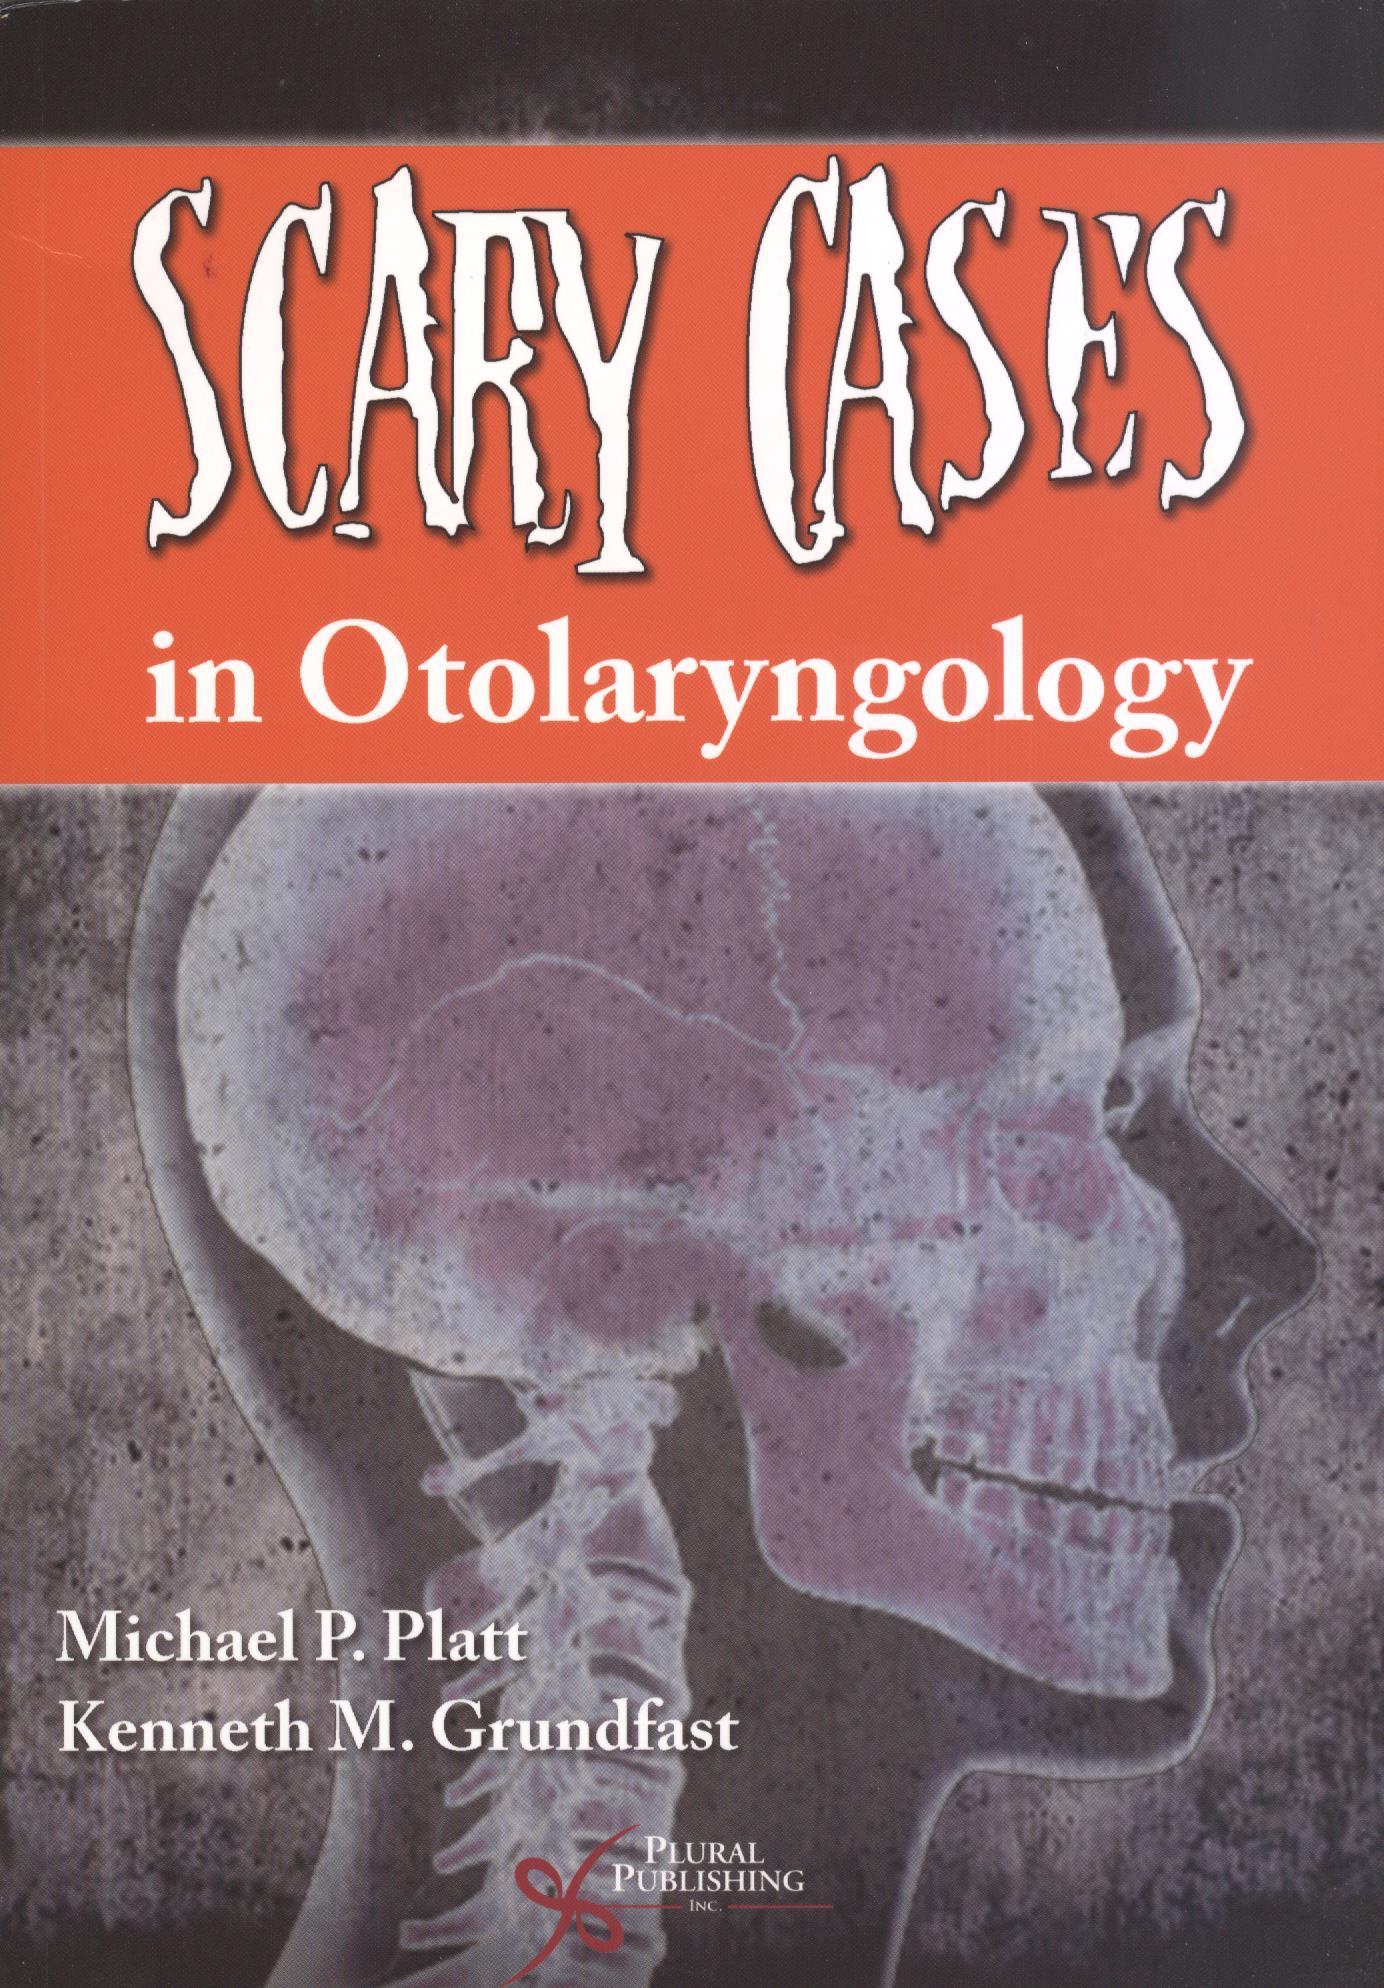 Scary Cases in Otolaryngology